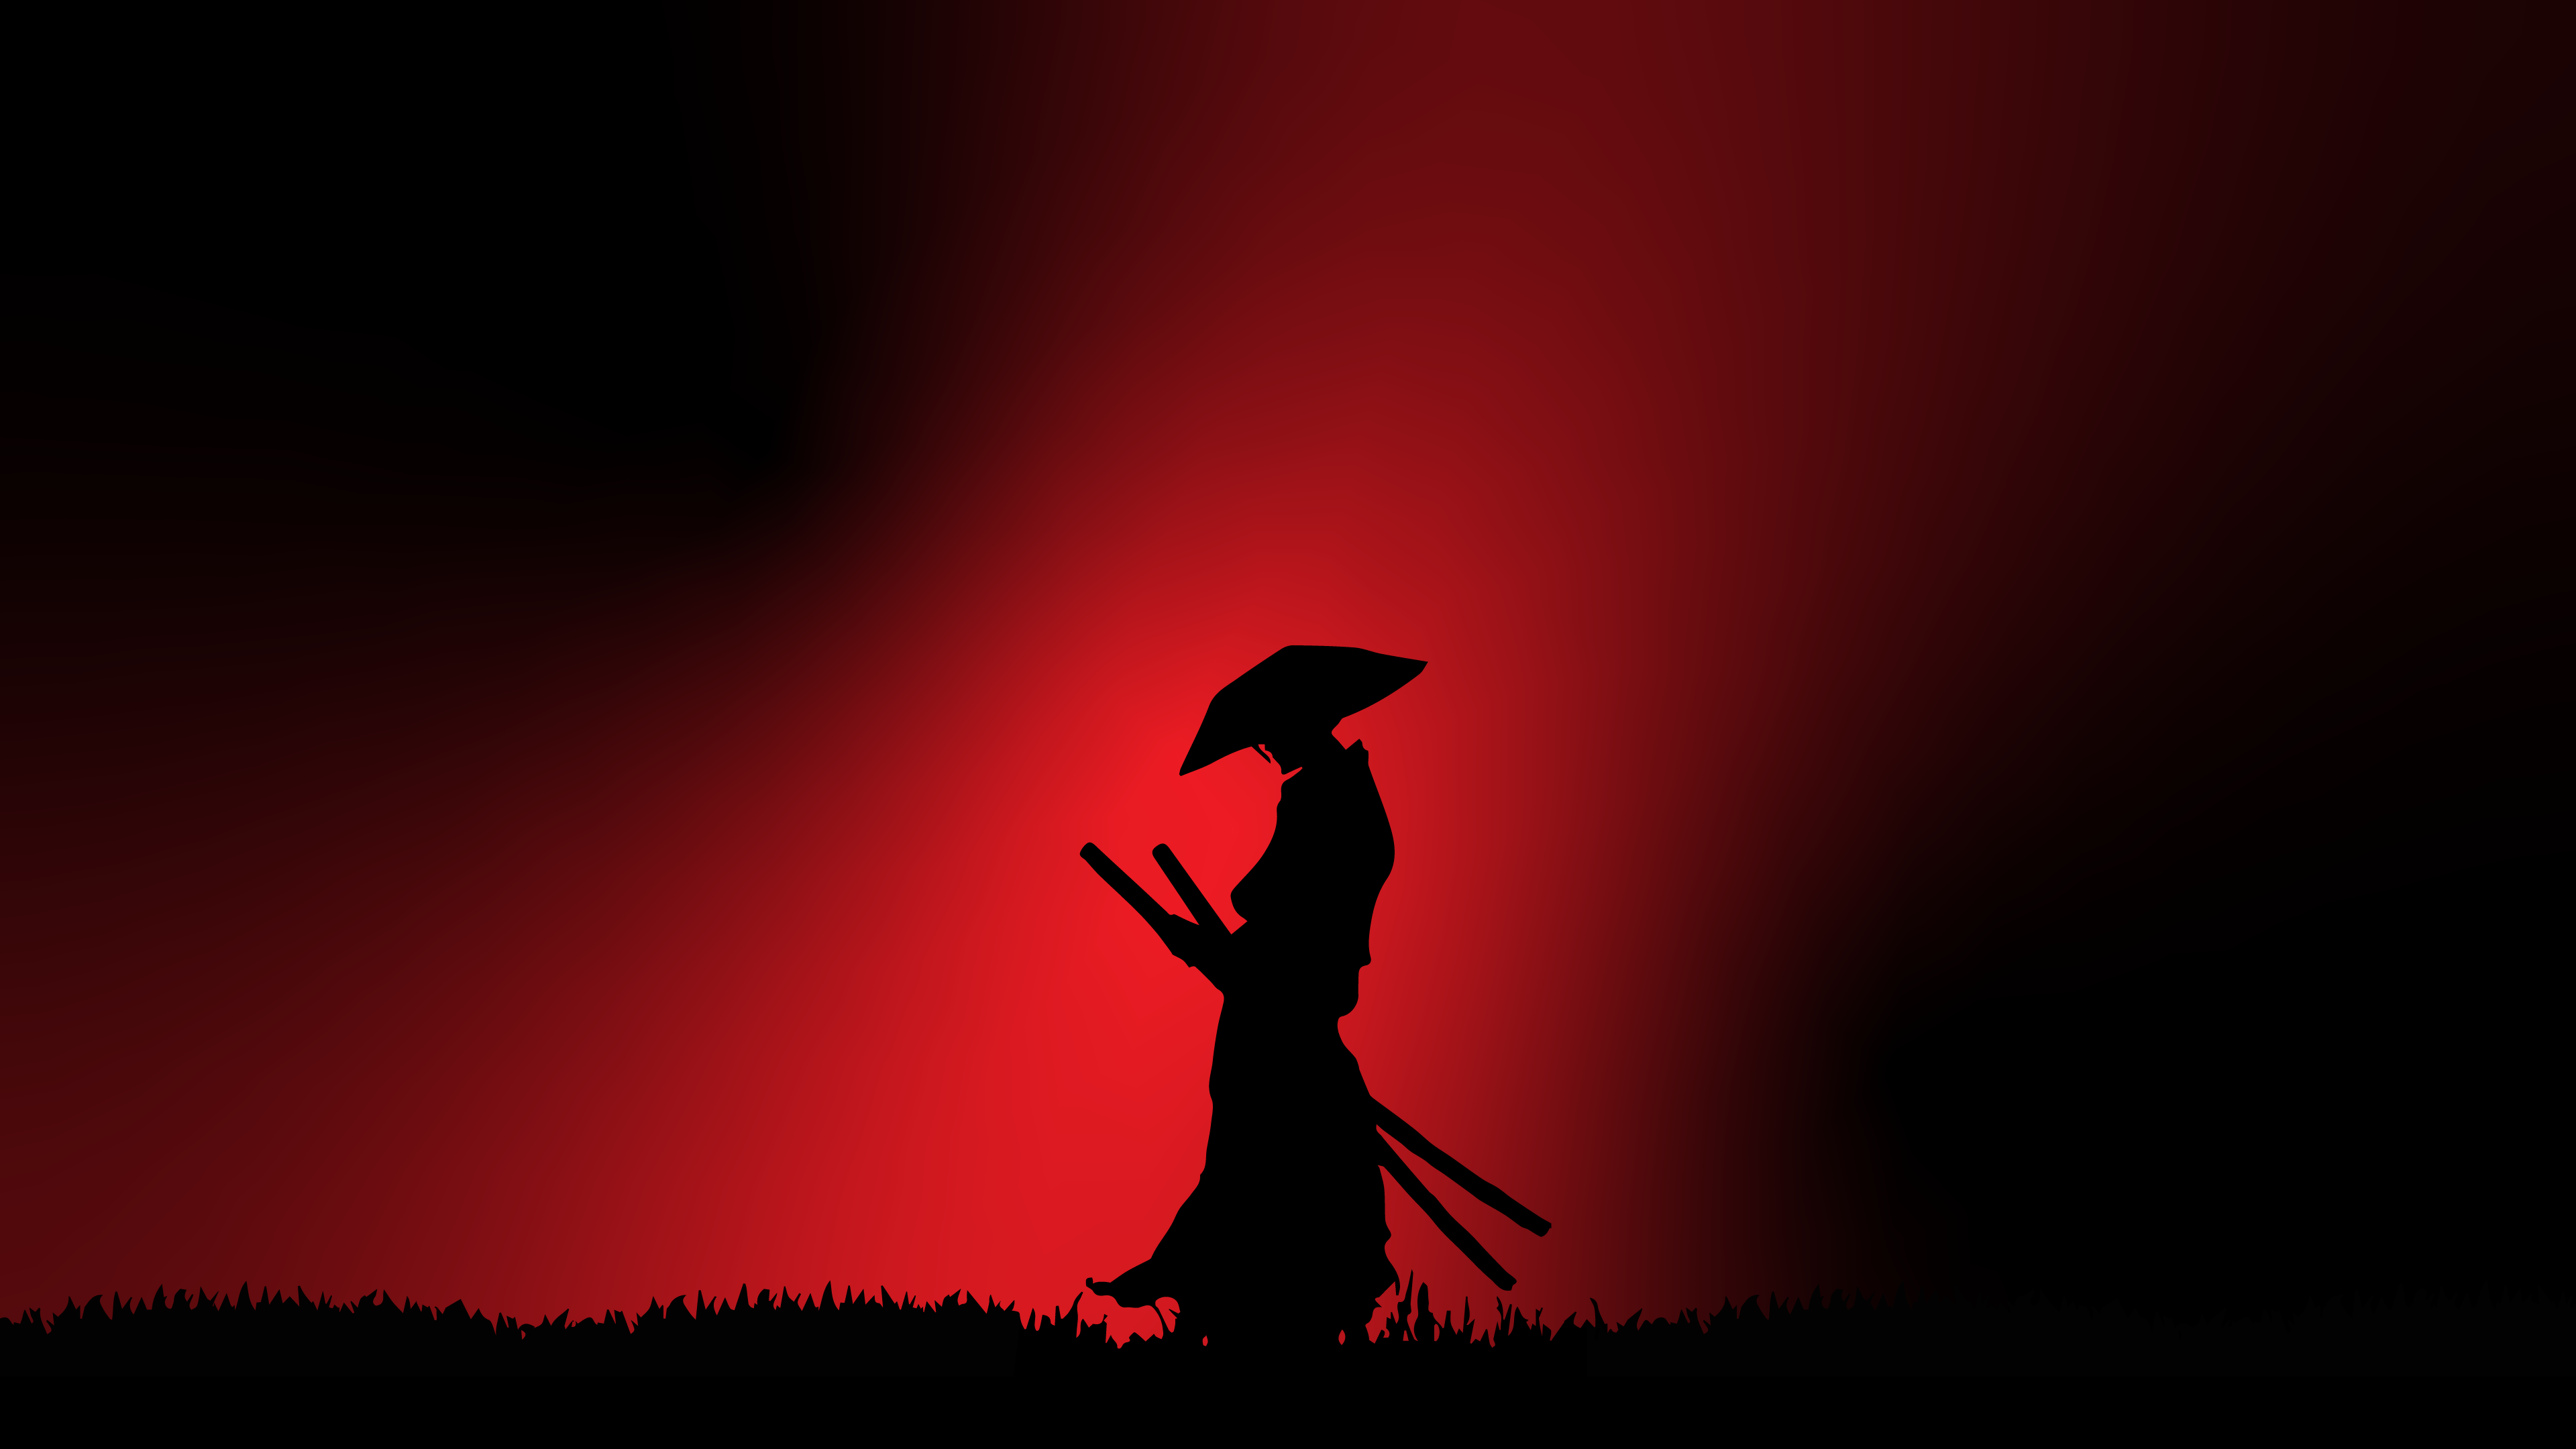 Samurai red 4k (3840x2160). Samurai wallpaper, Desktop wallpaper art, Samurai artwork